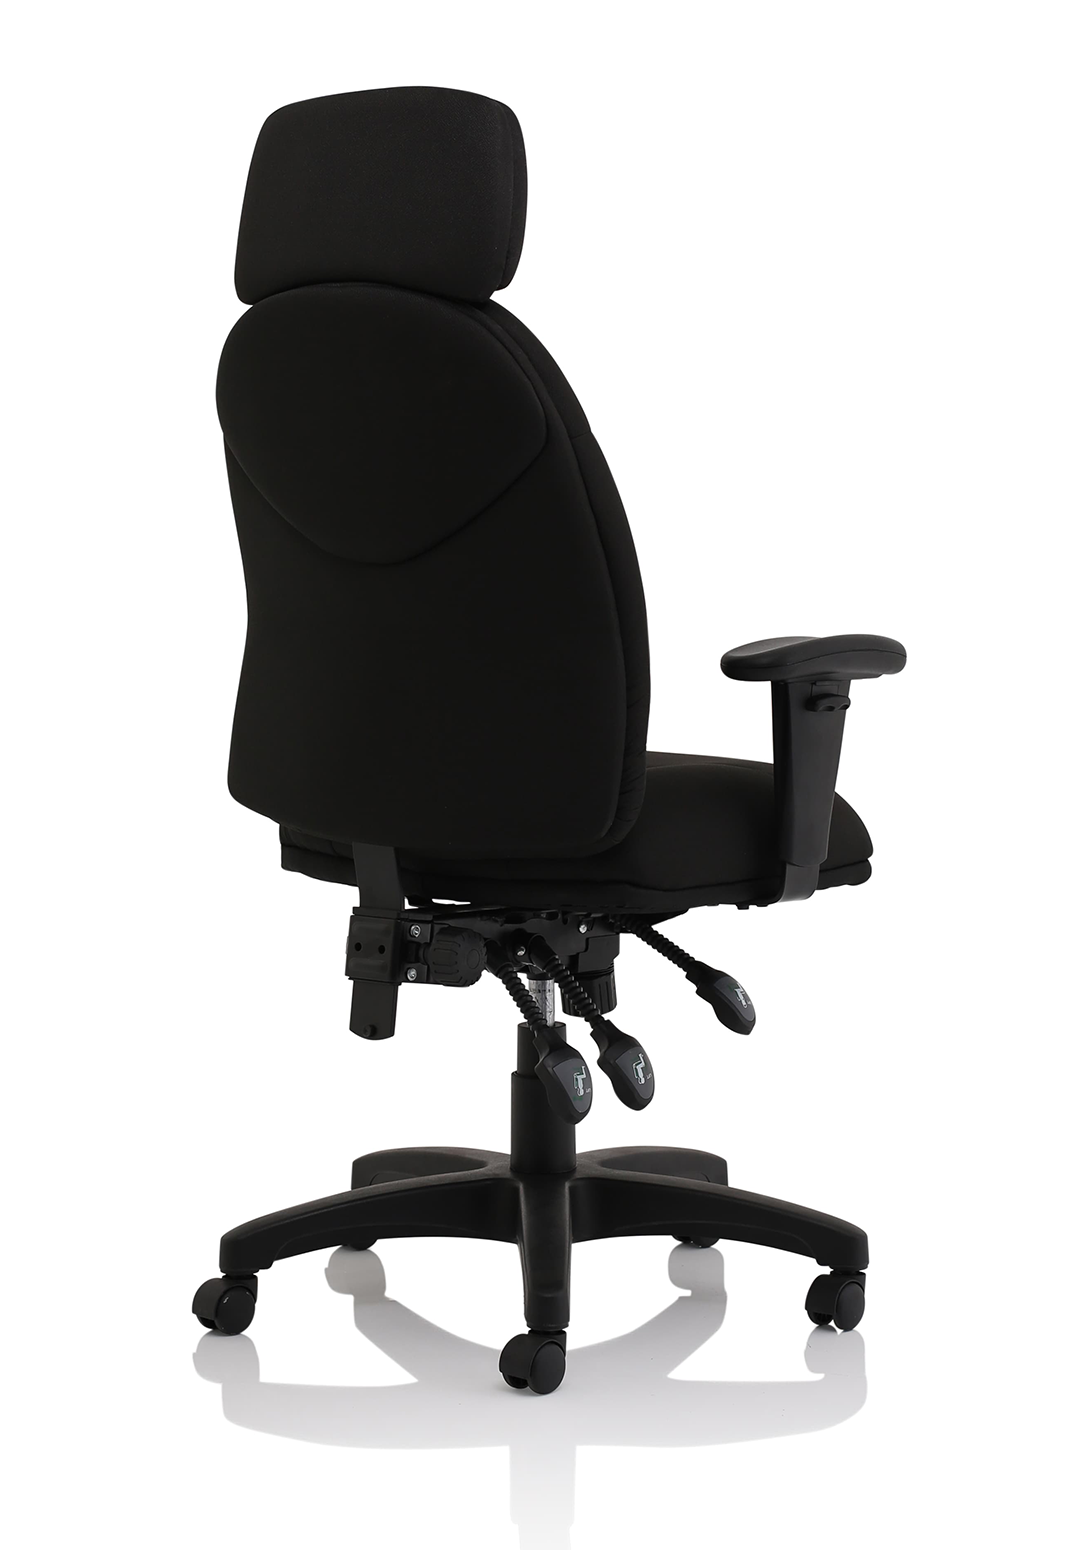 Jet Executive Chair